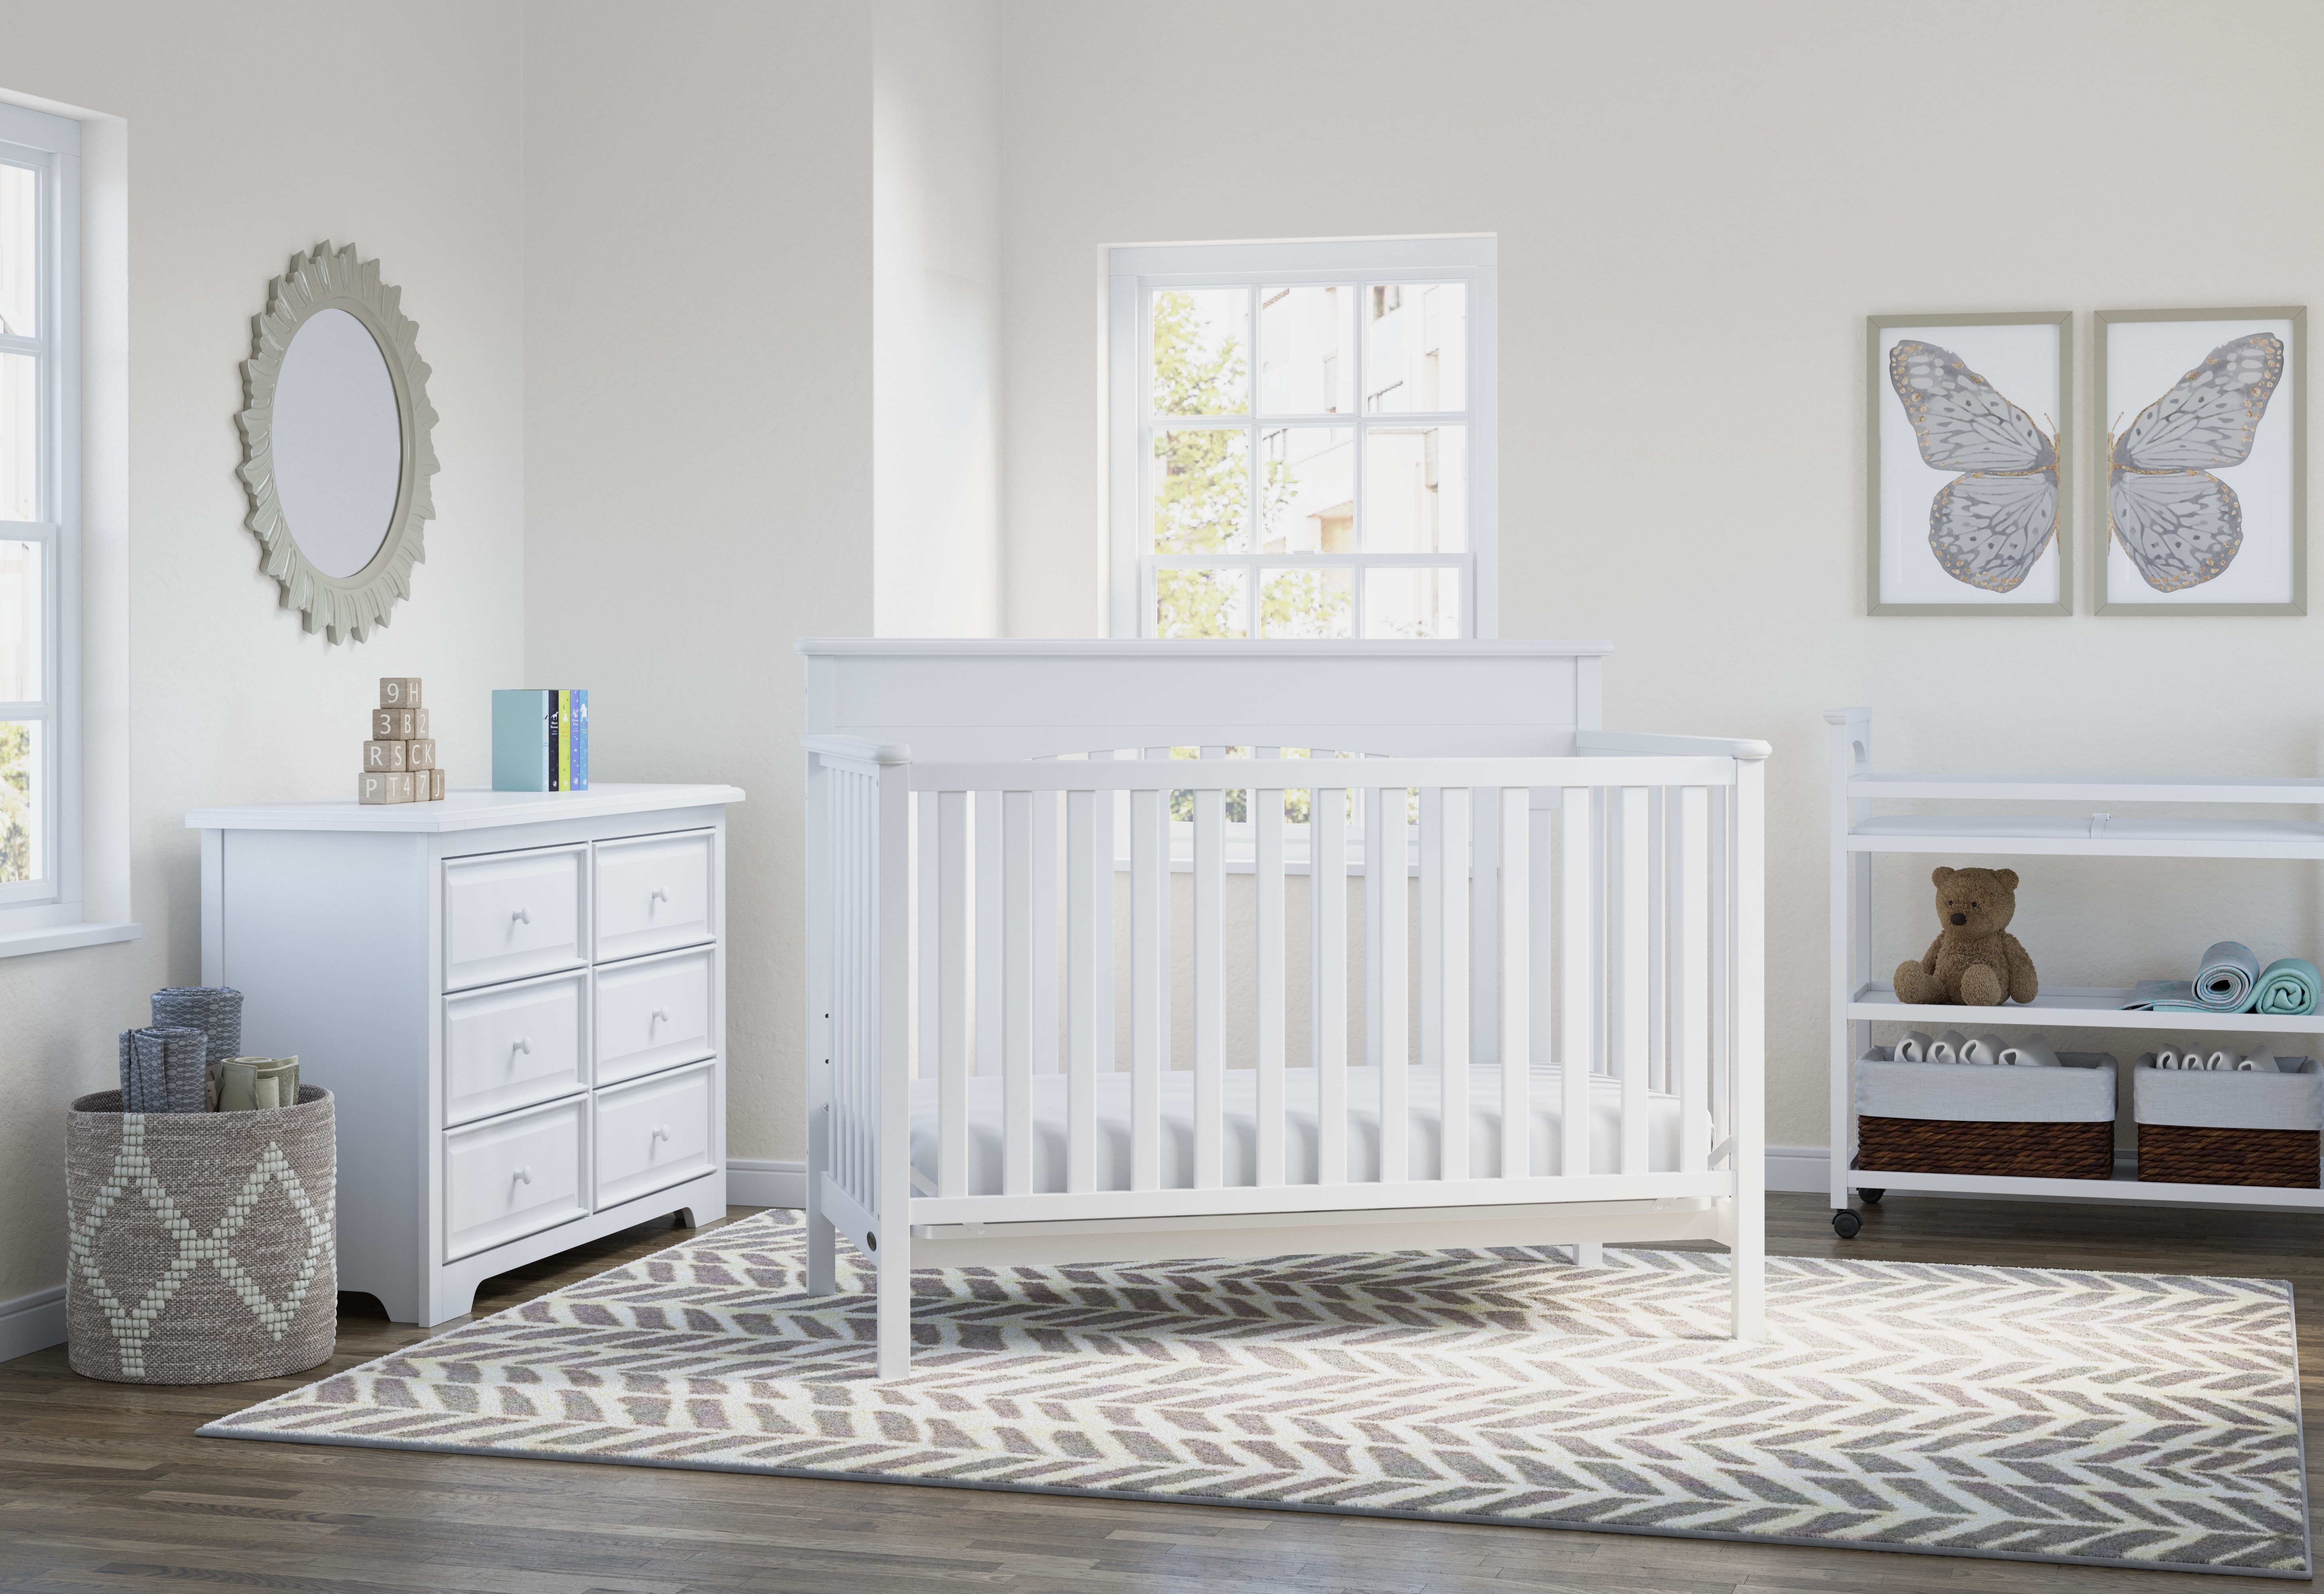 Graco Lauren 5-in-1 Convertible Baby Crib, White - image 2 of 10